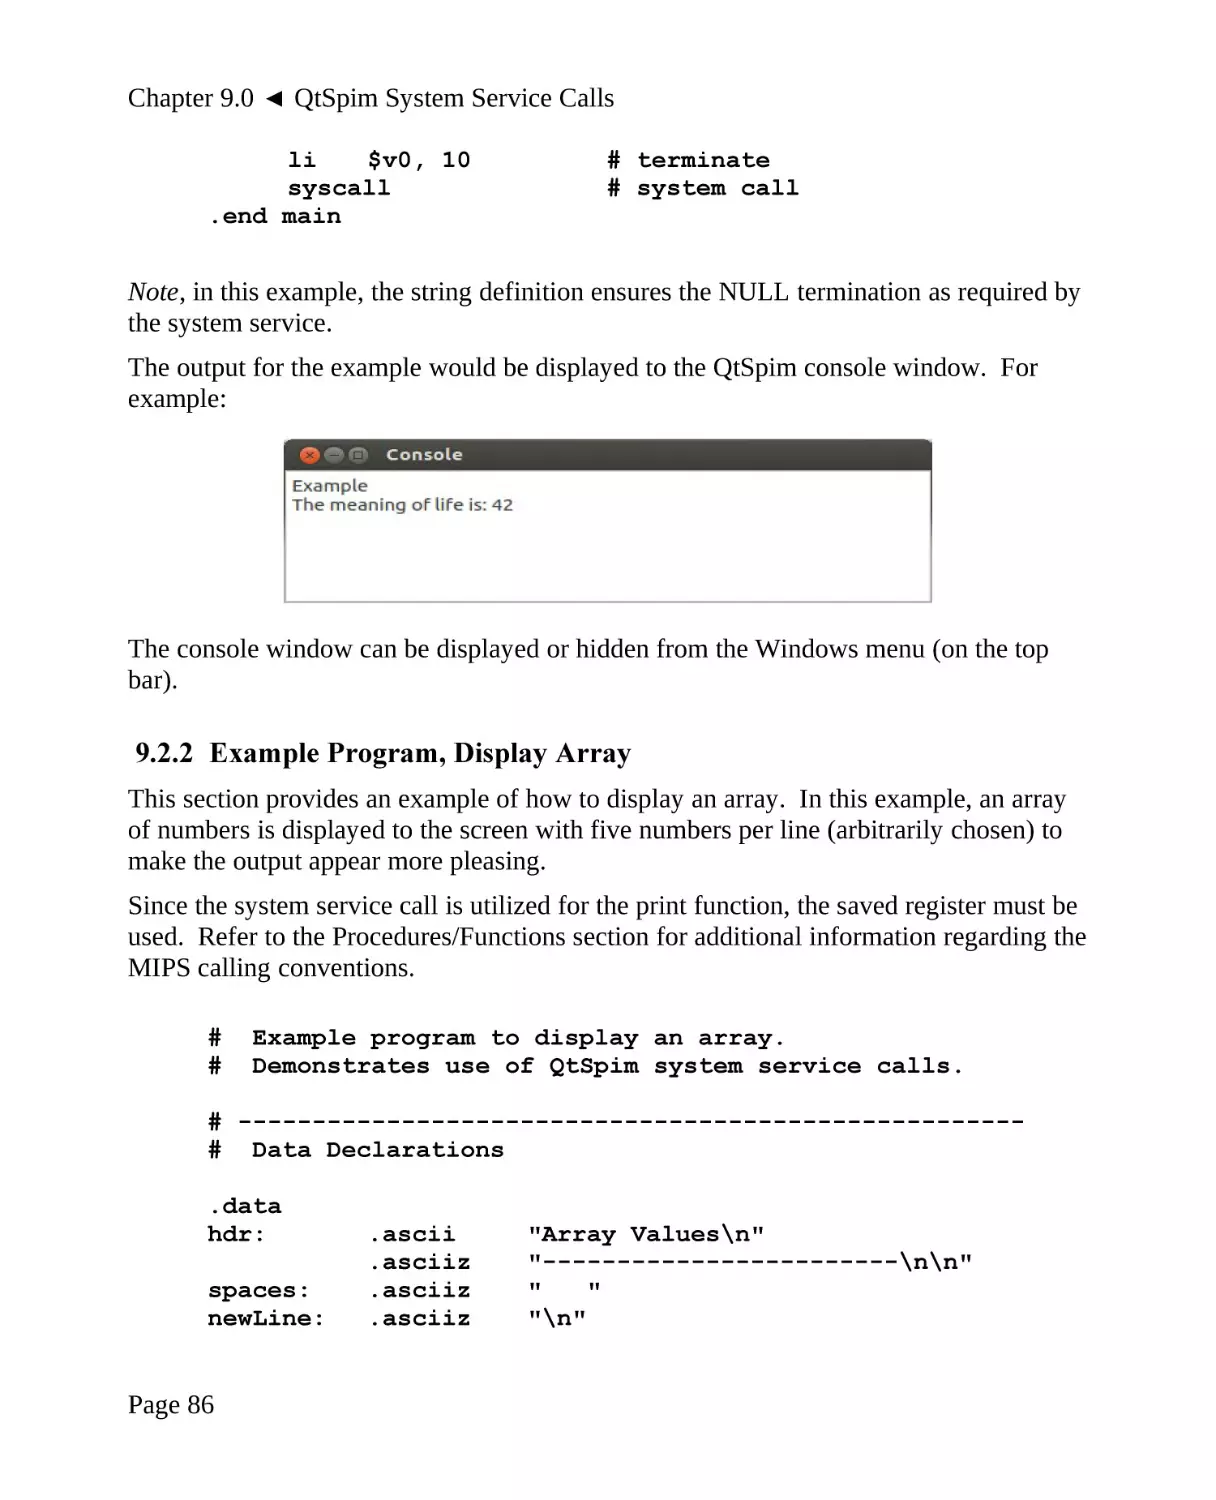 9.2.2 Example Program, Display Array